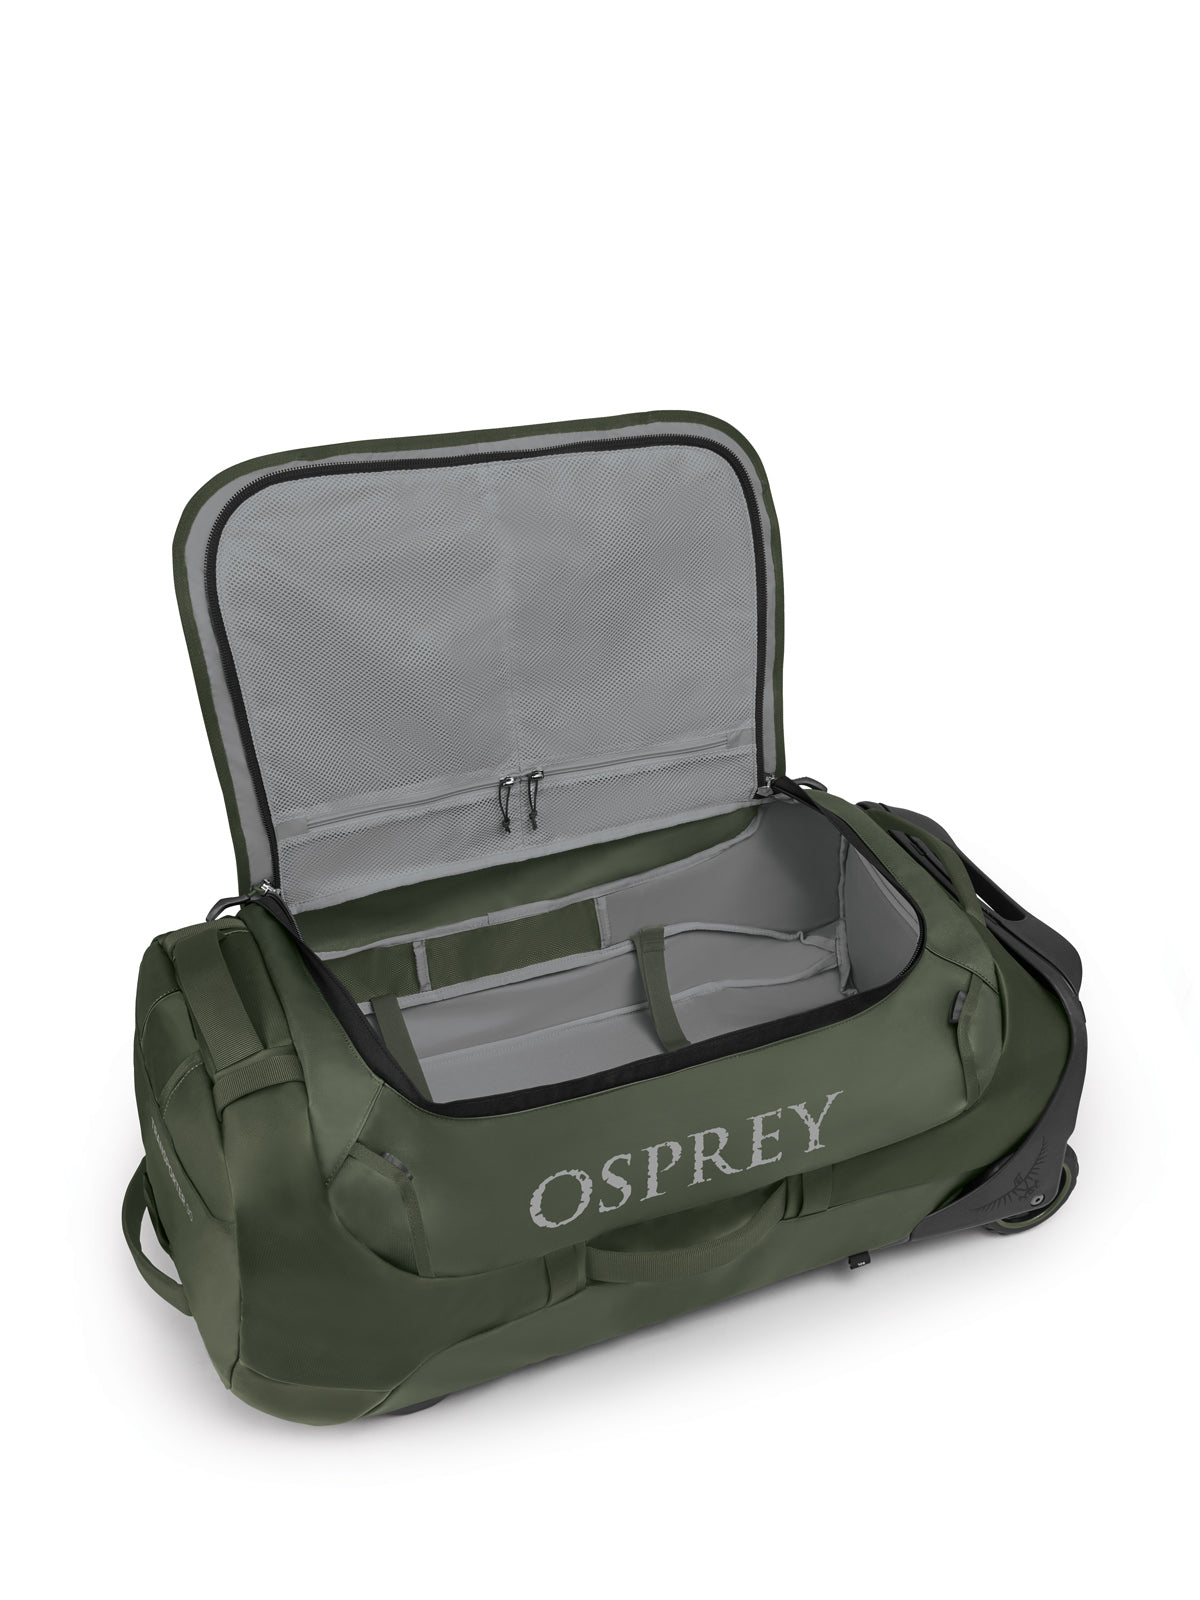  Osprey Packs Transporter 95 Expedition Duffel, Black